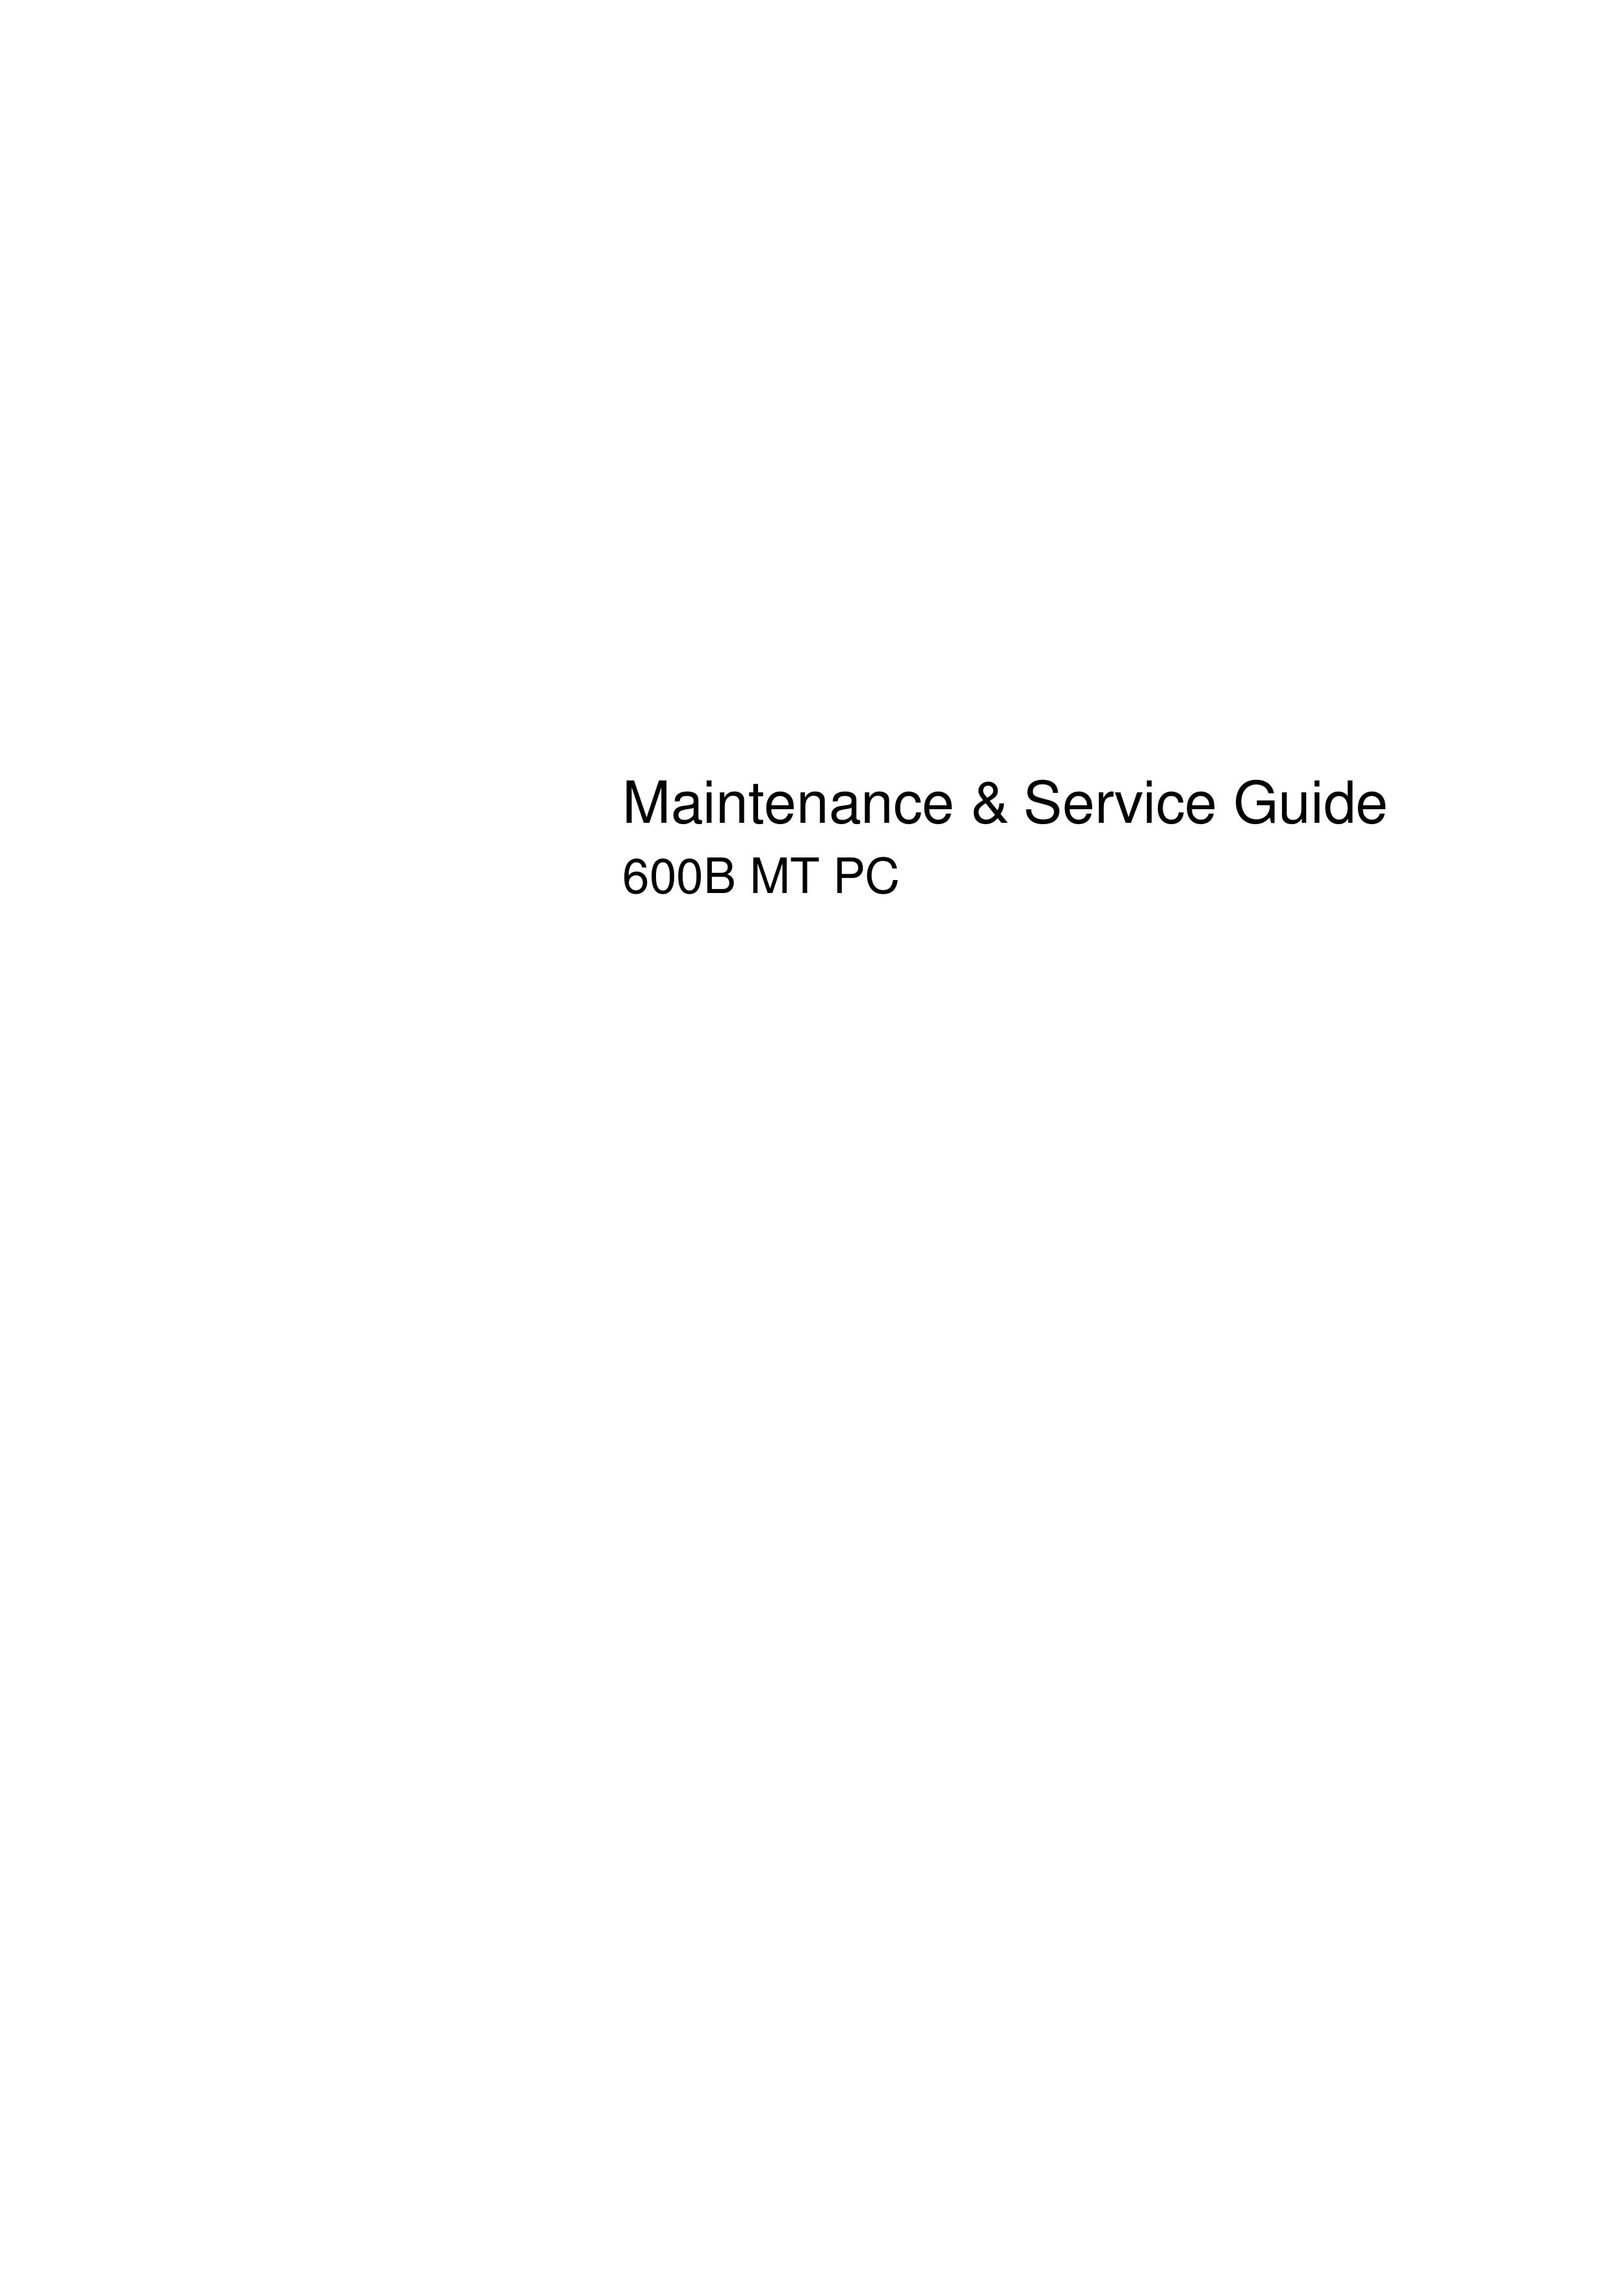 HP (Hewlett-Packard) 600B MT PC Personal Computer User Manual